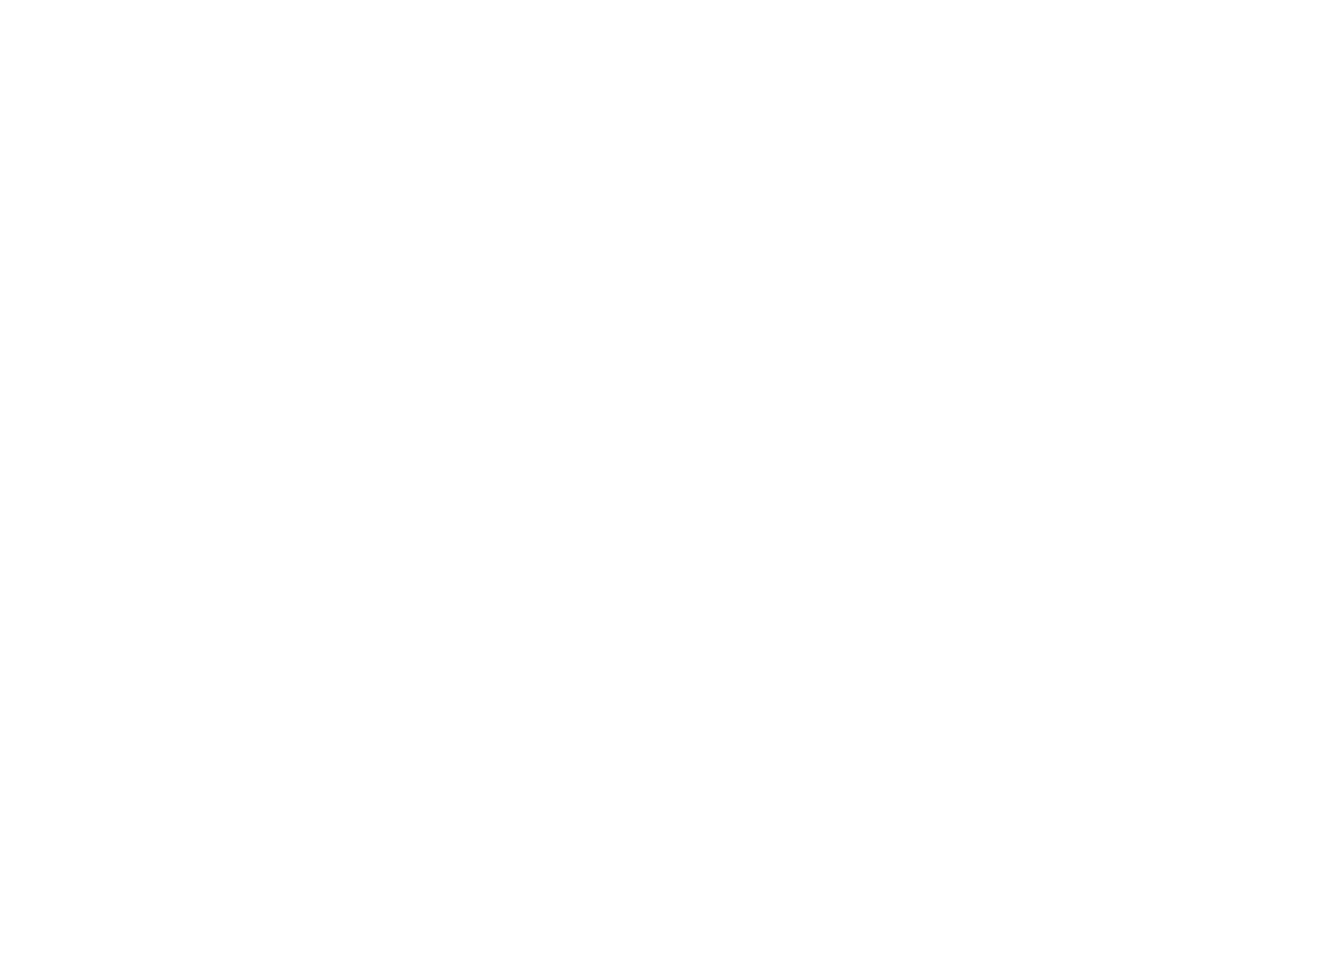 VICTORIA COUNTY TRANSIT 